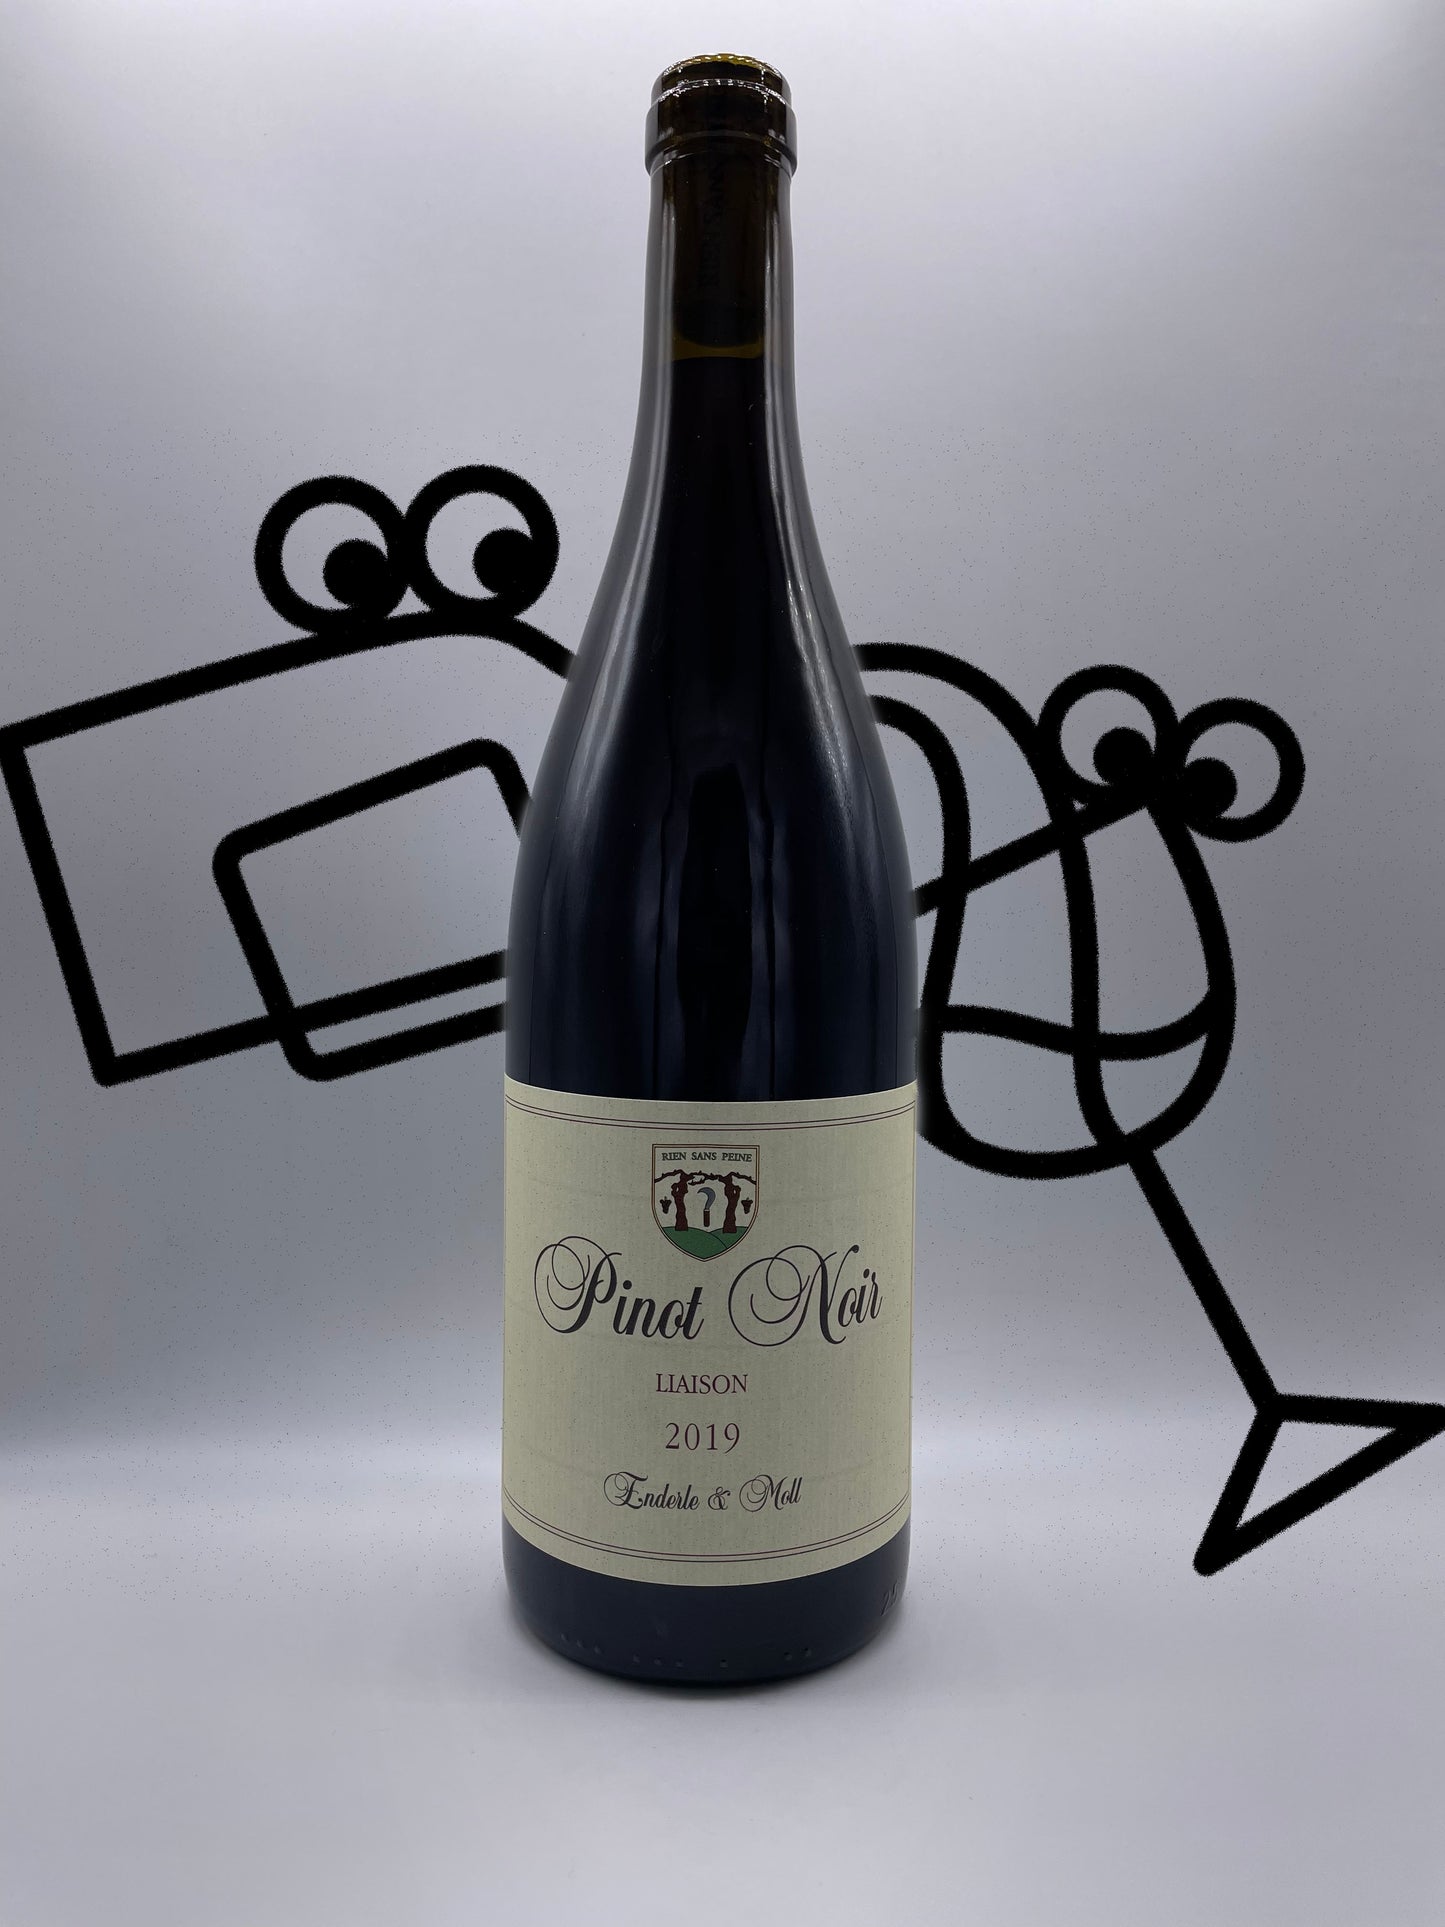 Enderle & Moll 'Liaison' Pinot Noir Baden, Germany 2019 Williston Park Wines